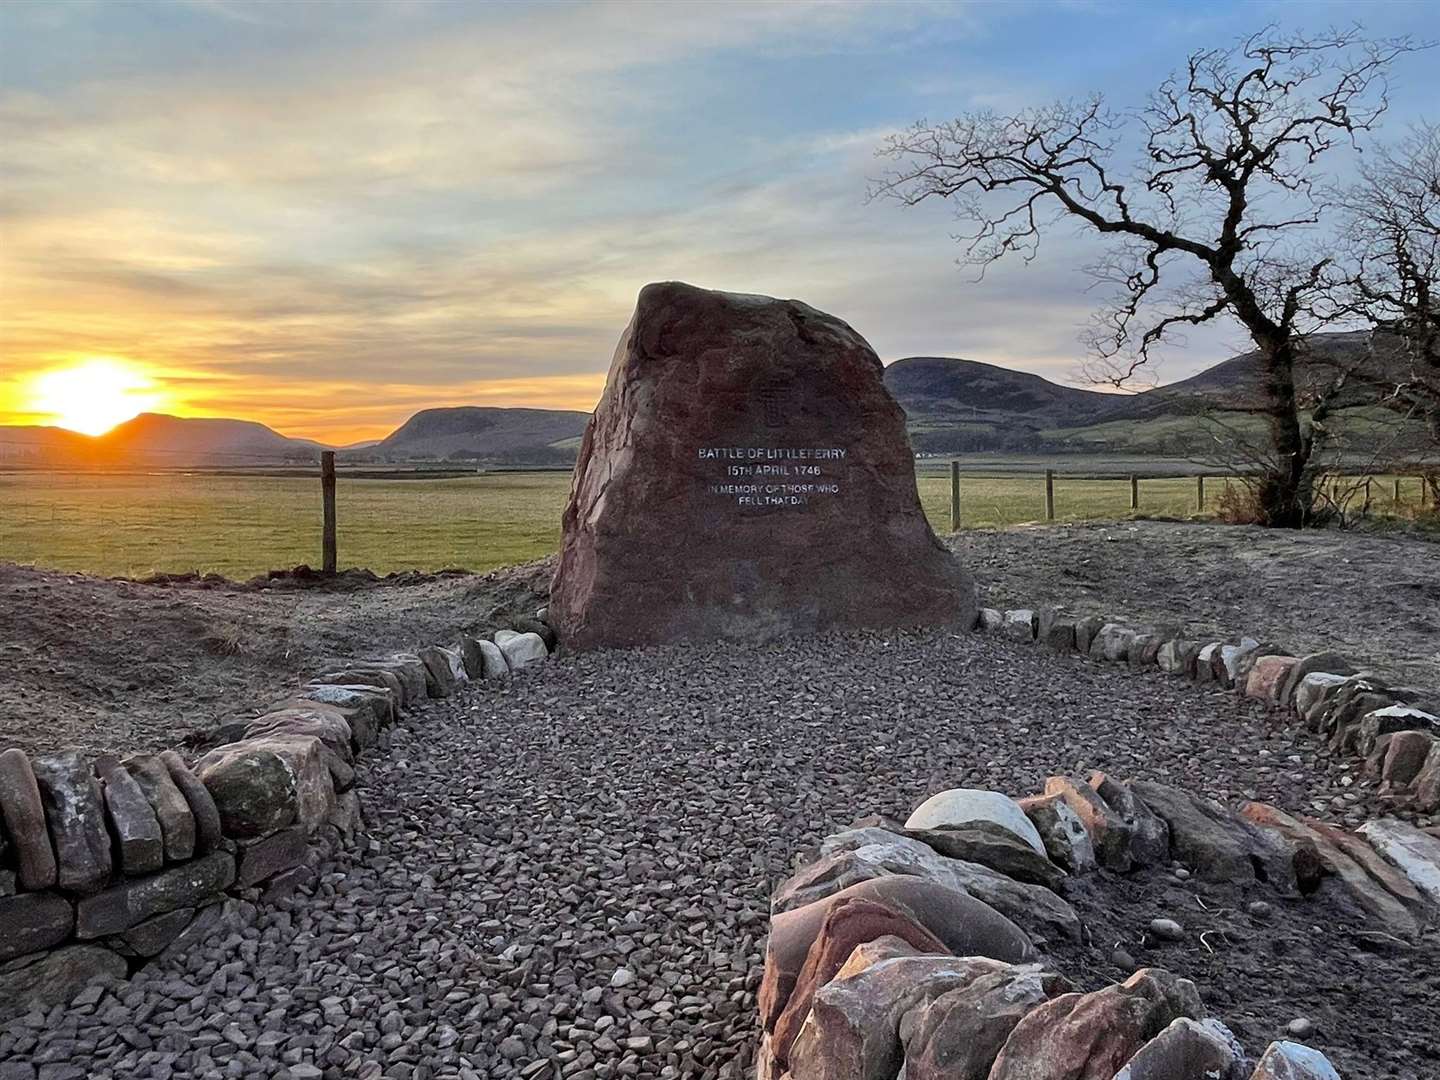 Littleferry battle memorial stone at sunset.